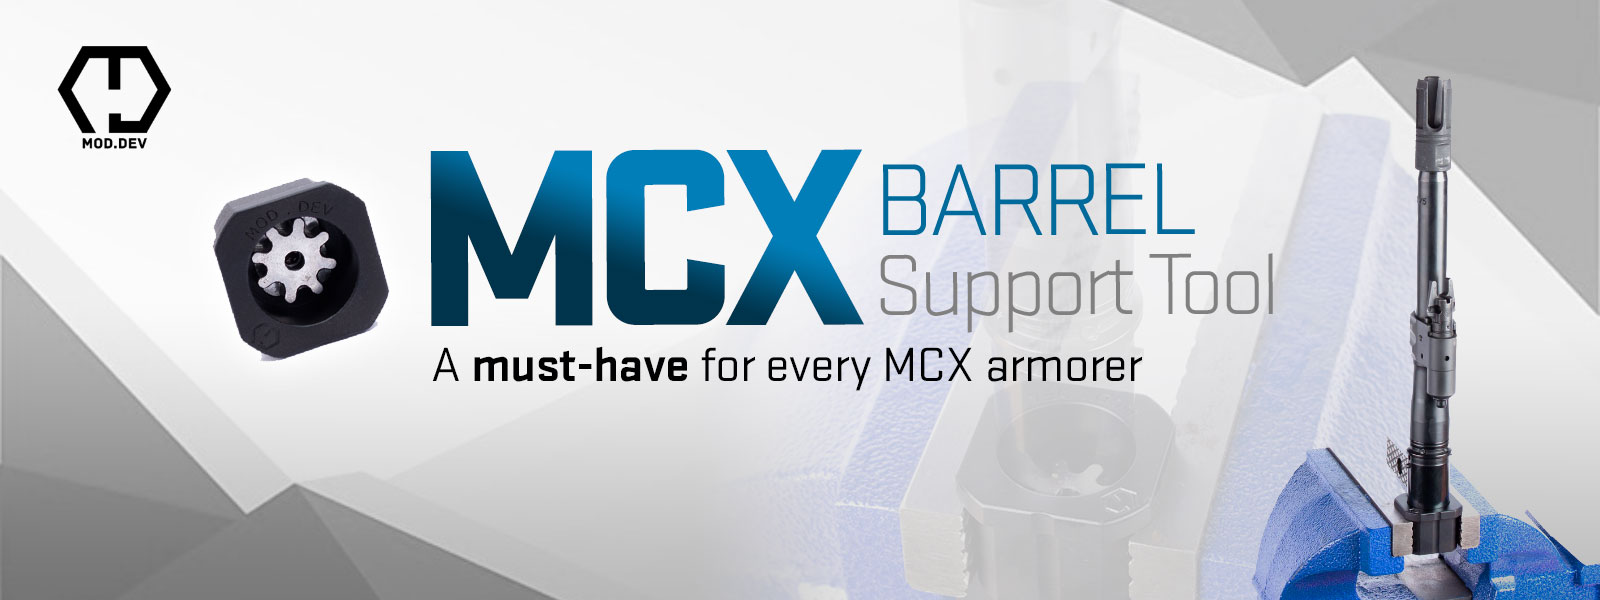 ModDev MCX Barrel Support Tool